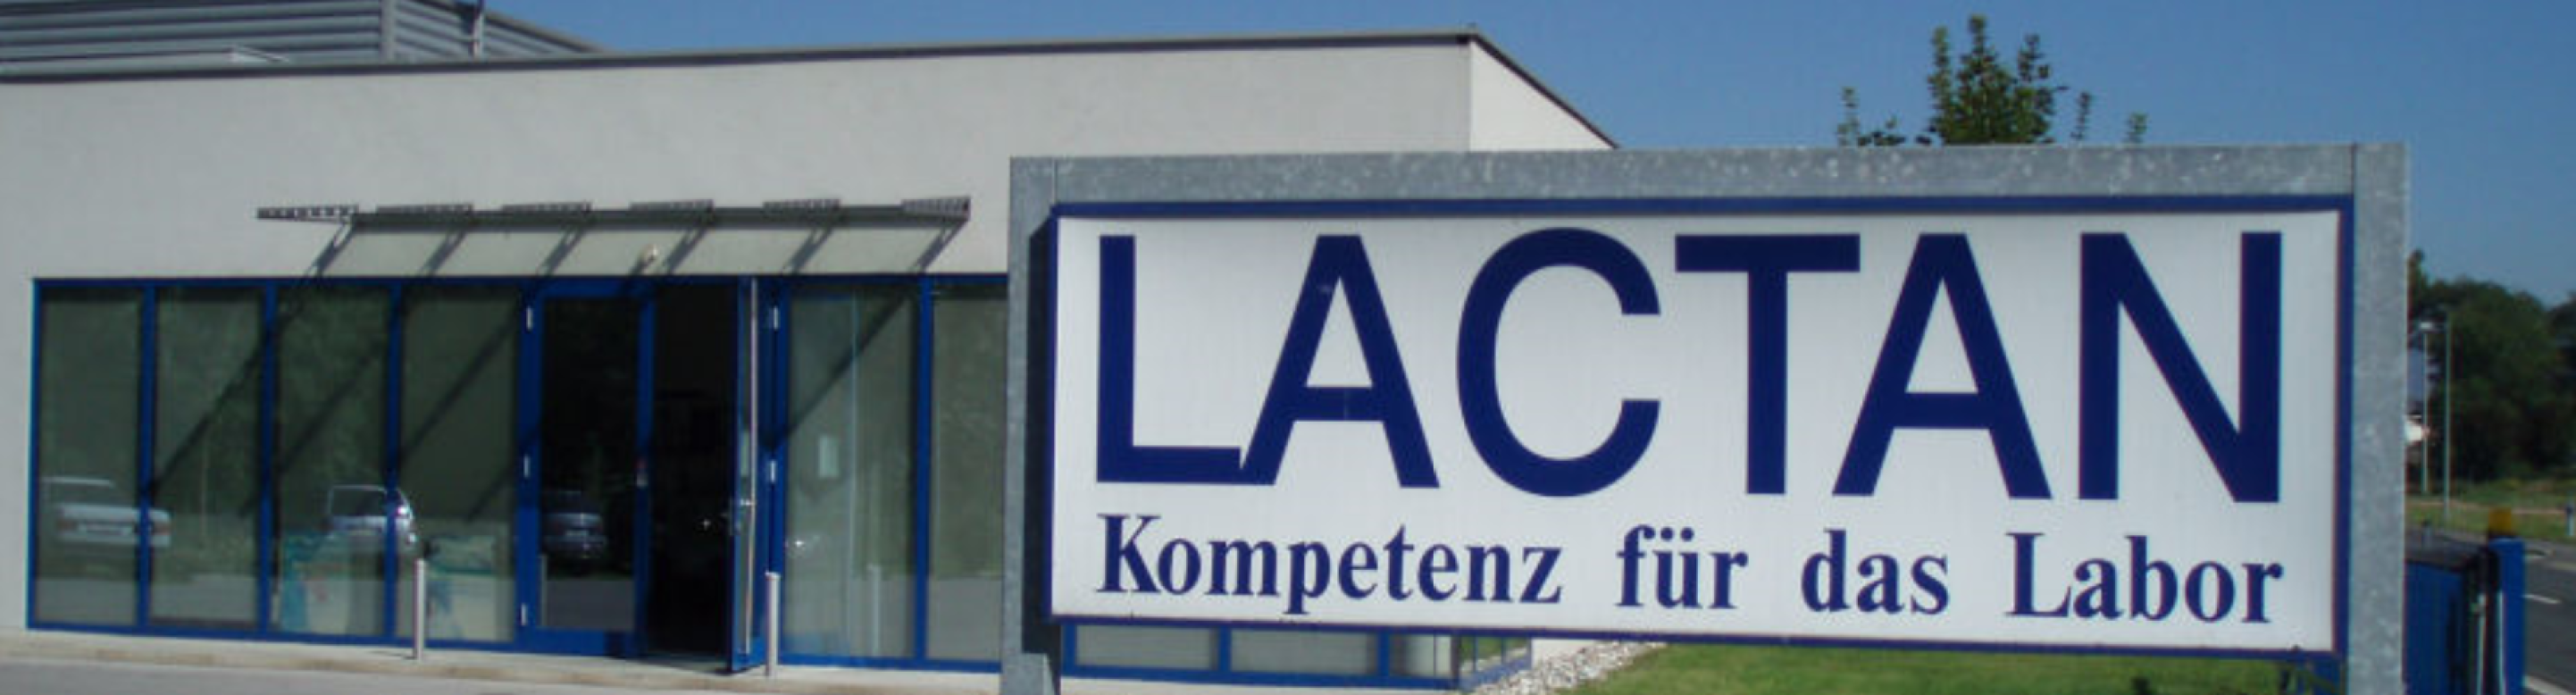 Bilder Lactan Chemikalien u Laborgeräte VertriebsgesmbH & Co KG